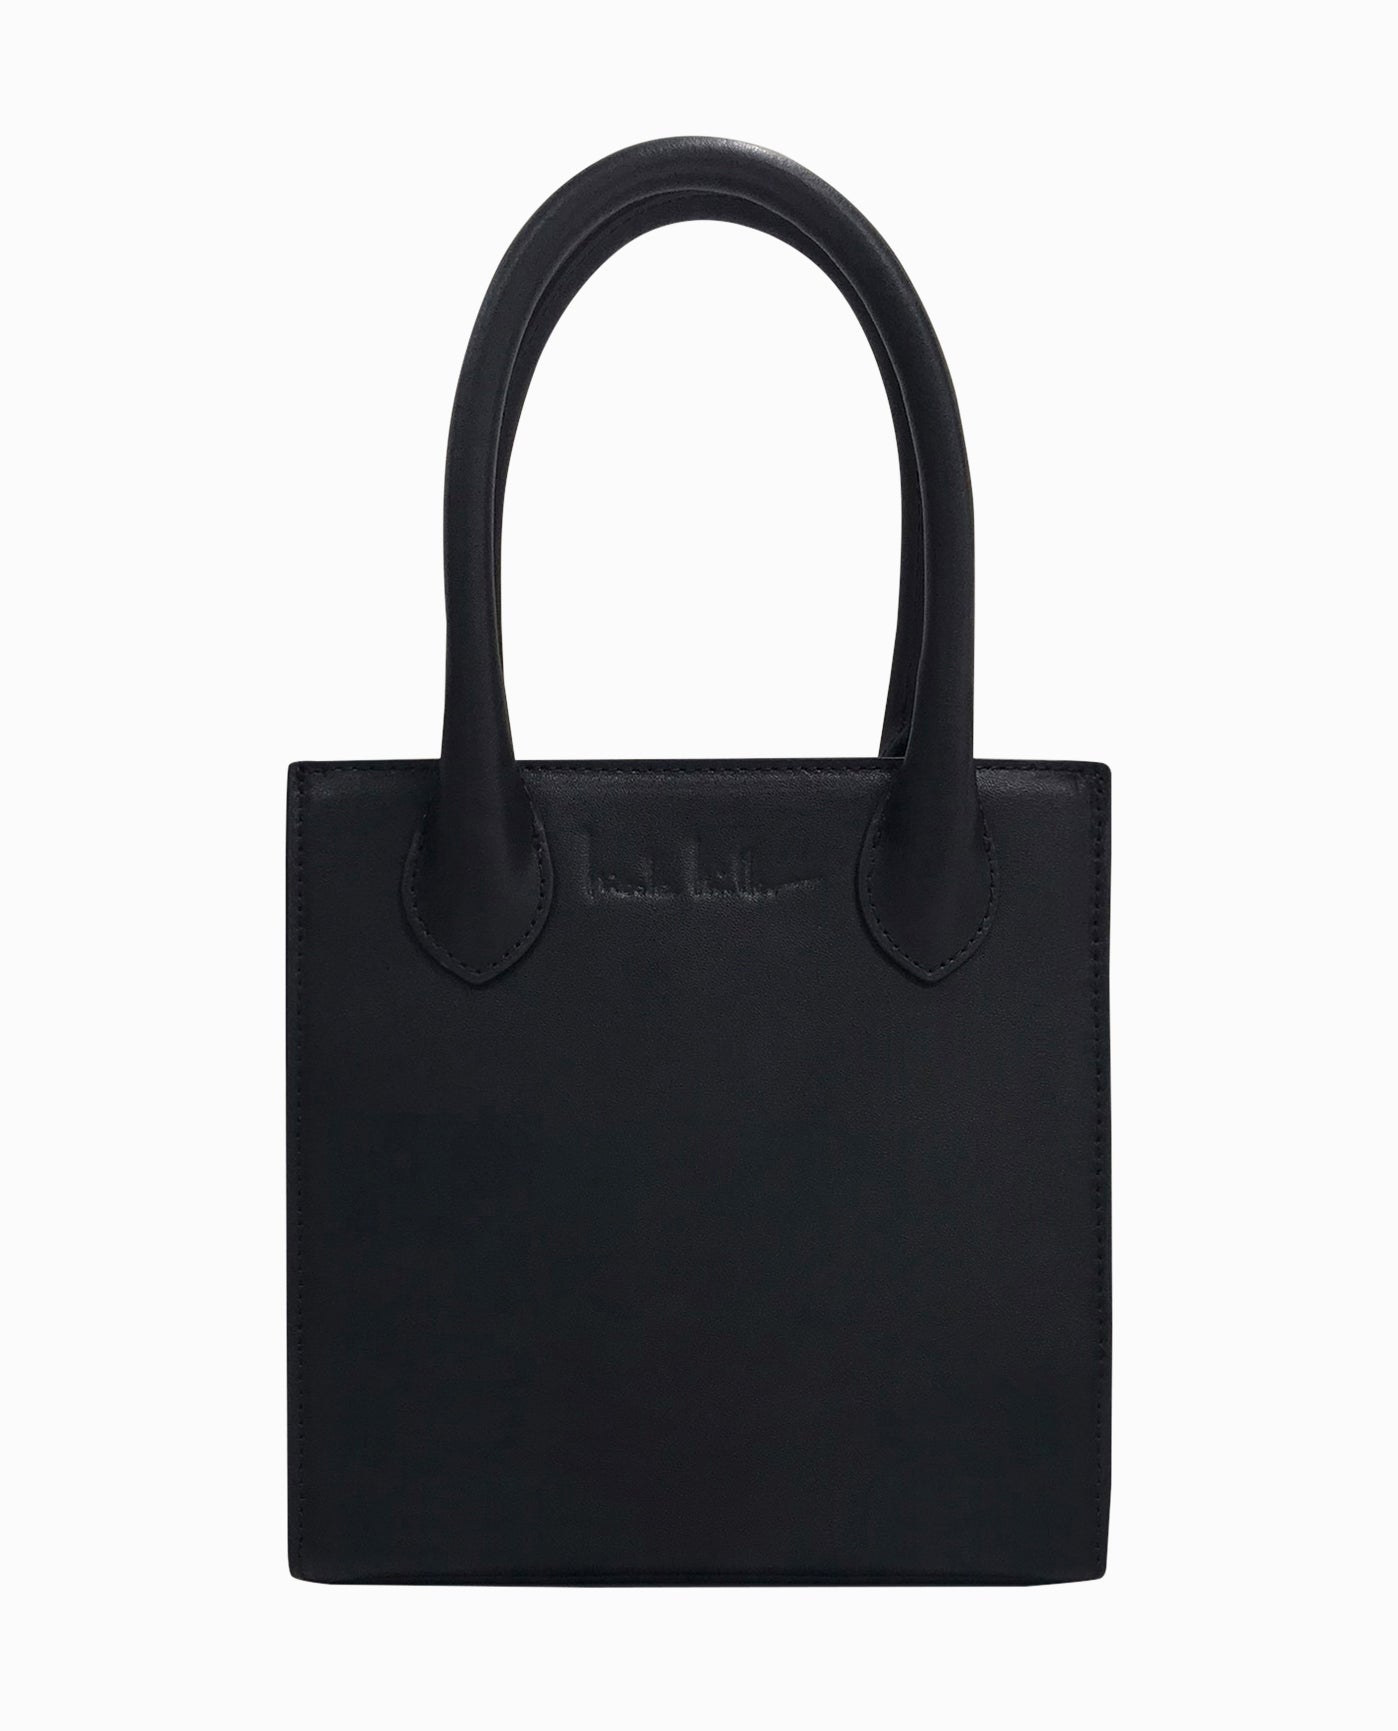 Nicole Millar Silver Leather shoulder purse | Leather shoulder purse, Purses,  Leather